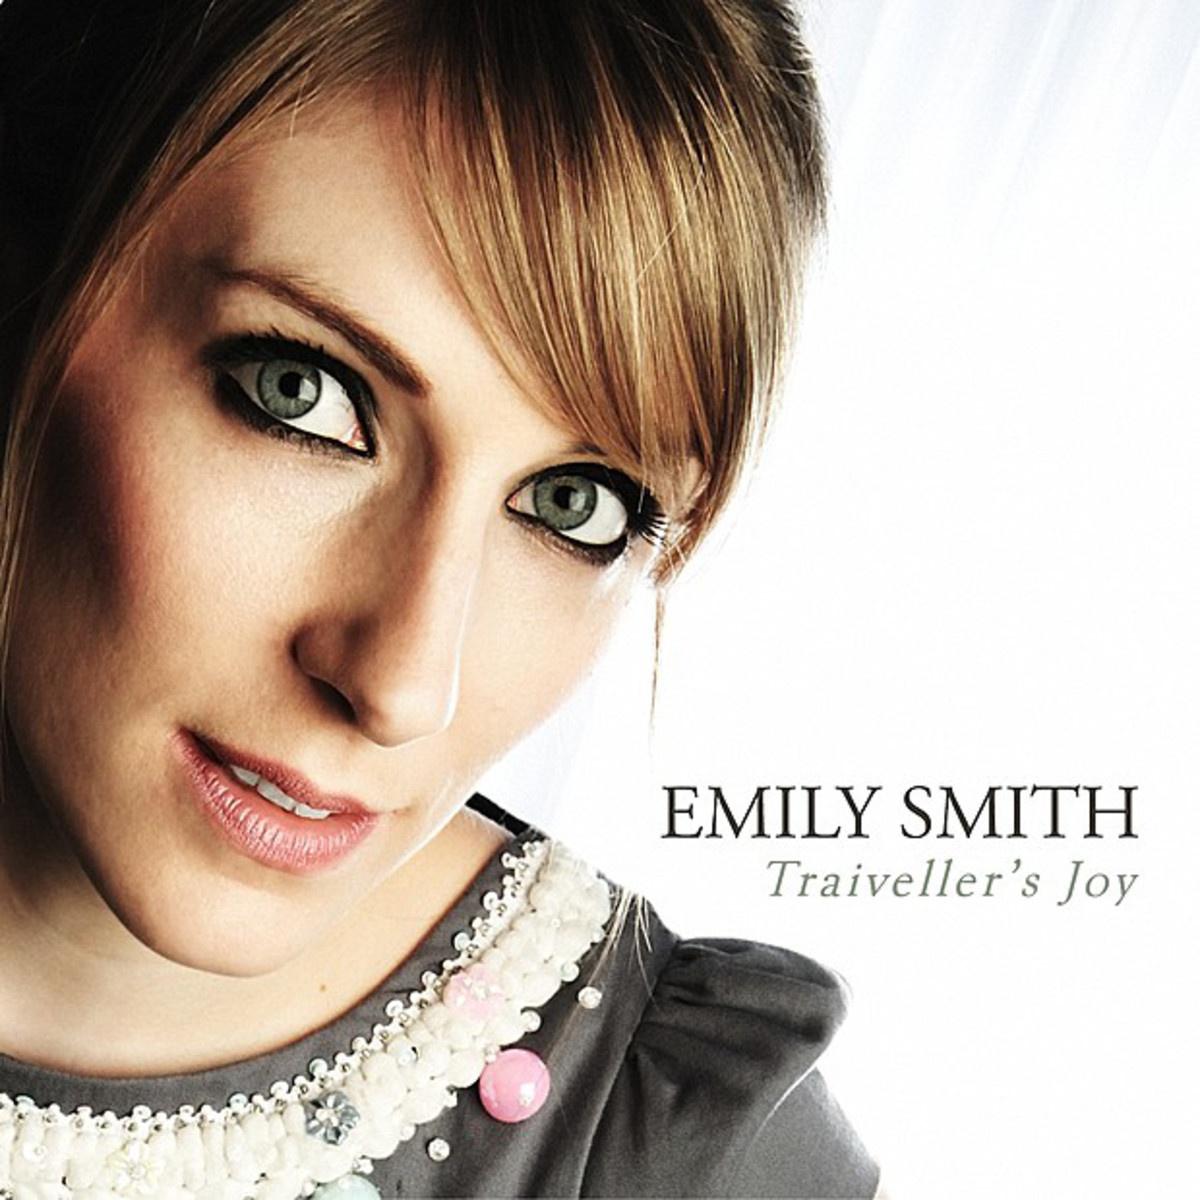 歌曲名《Roll On Lovely Doon》，由 Emily Smith 演唱，收录于《Traiveller's Joy》专辑中.